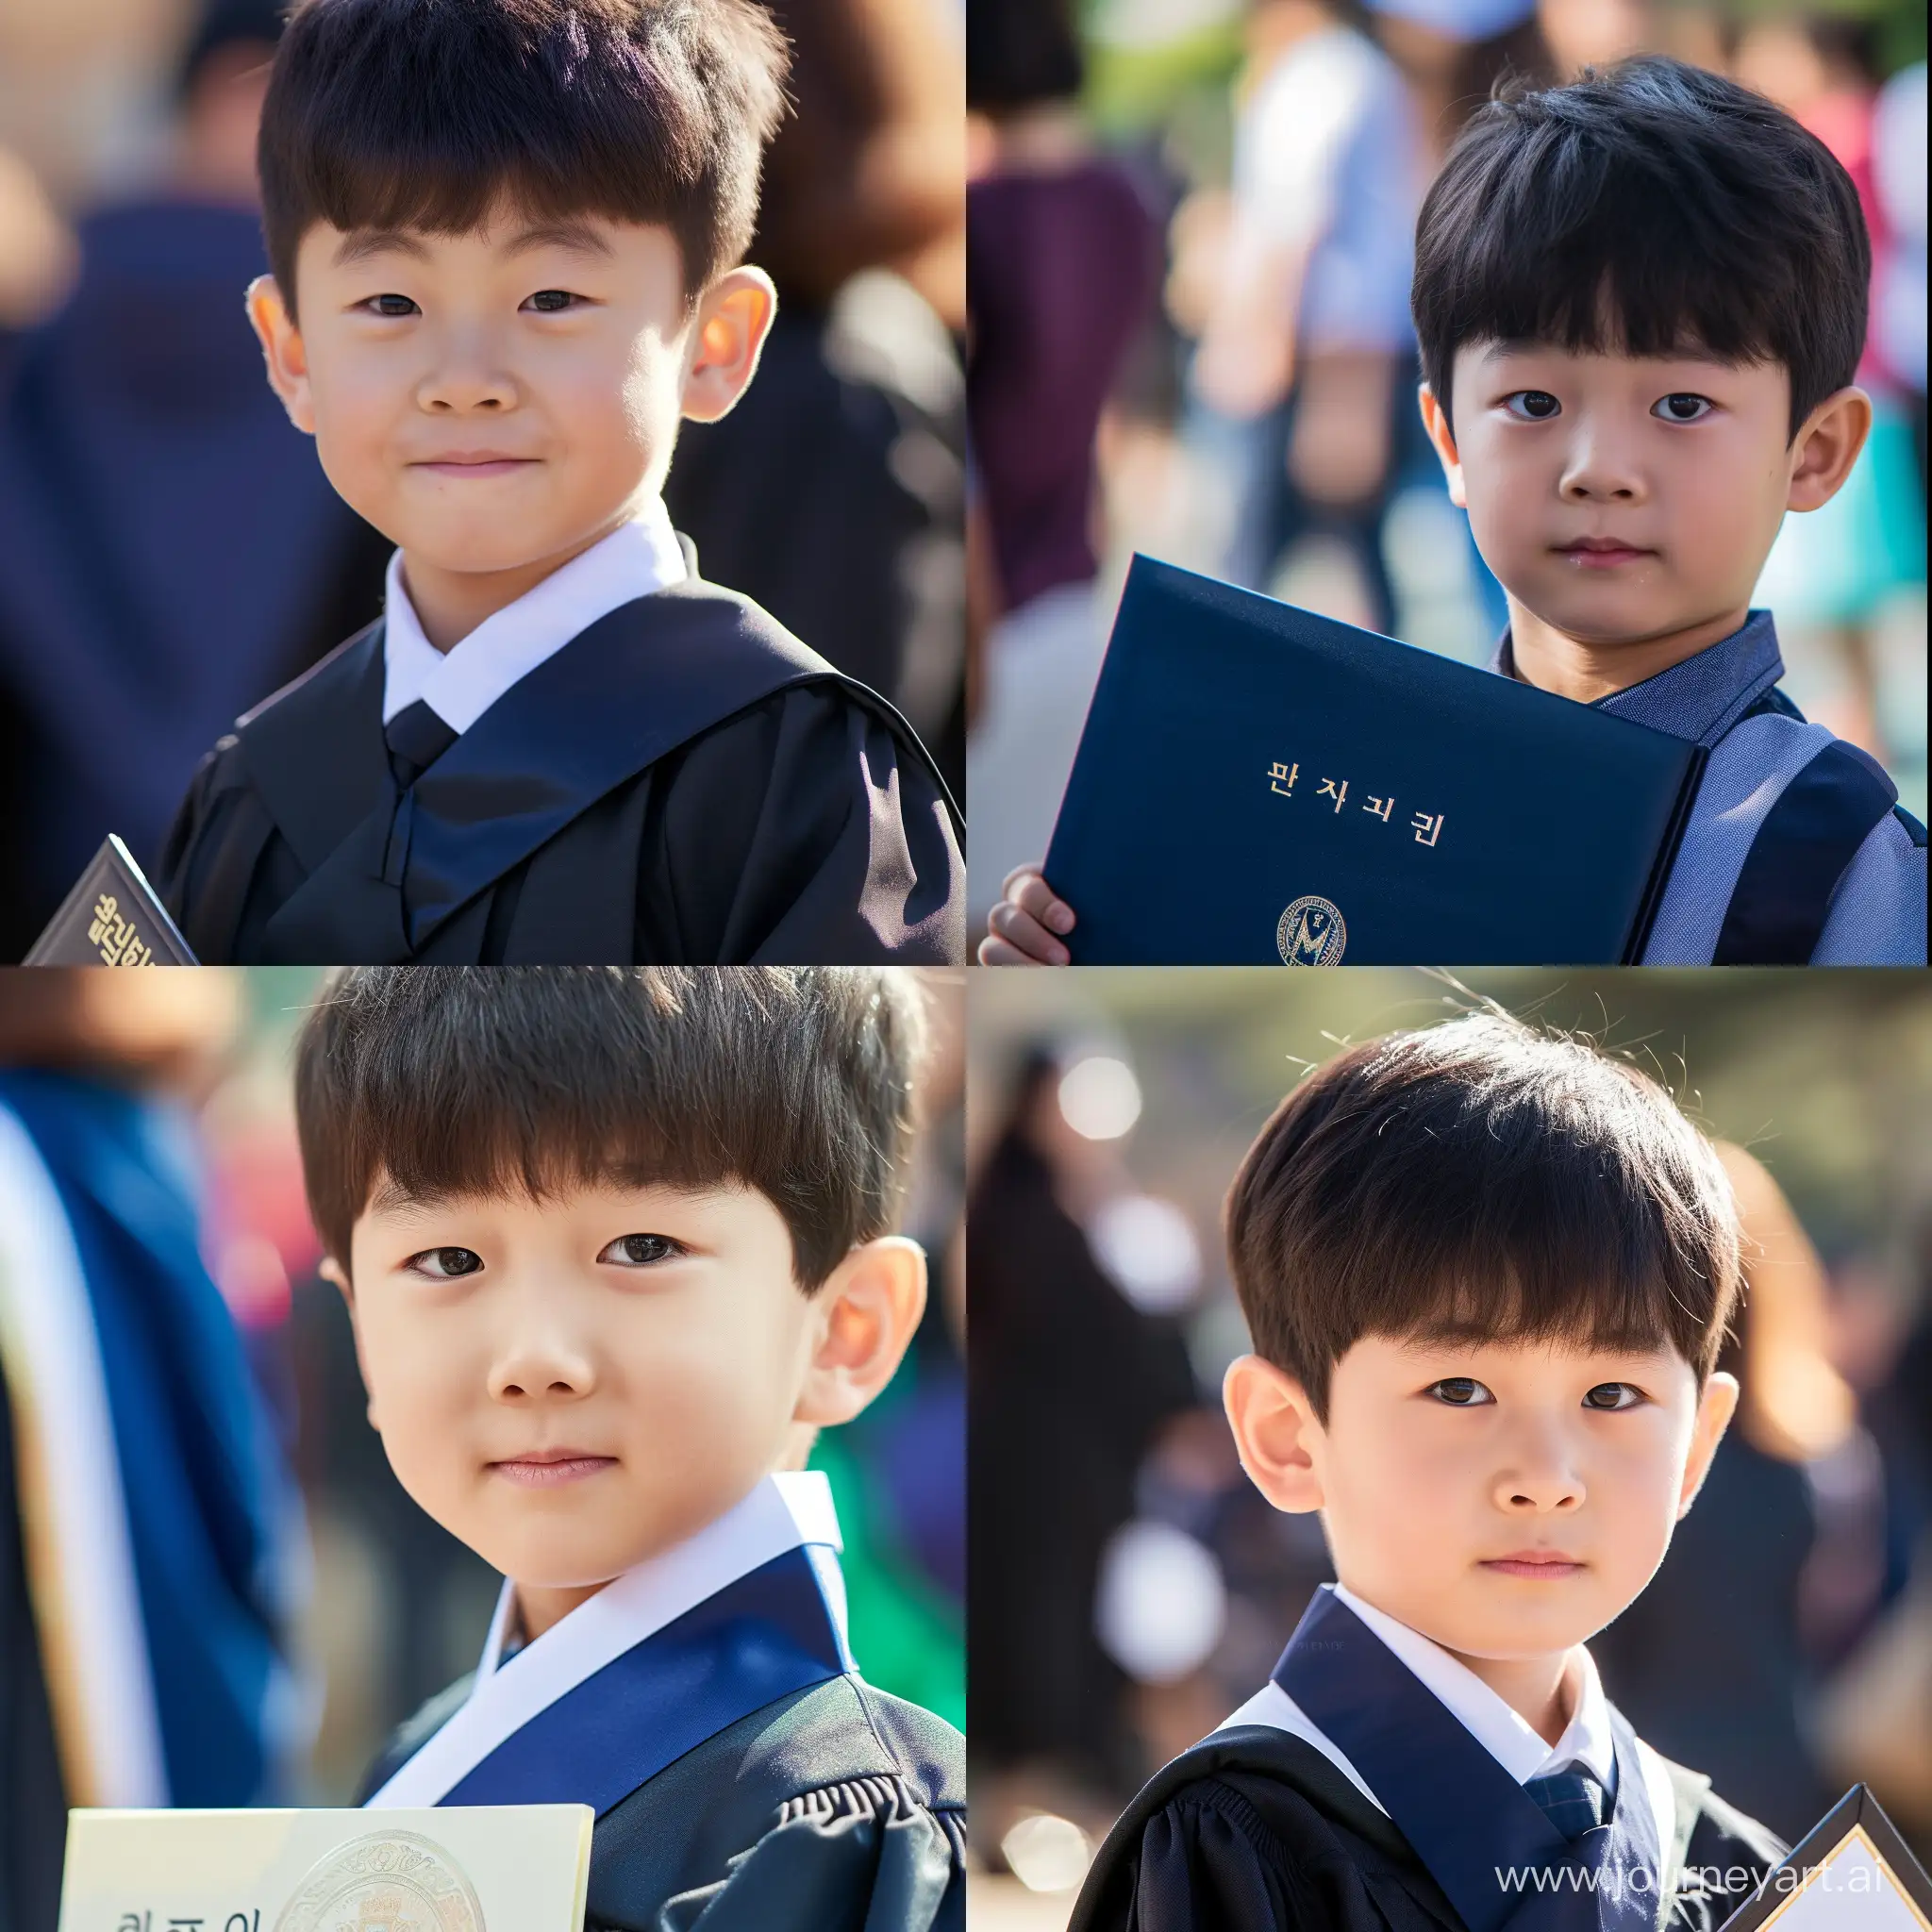 Proud-Korean-Boy-Celebrating-Graduation-with-Diploma-in-Hand